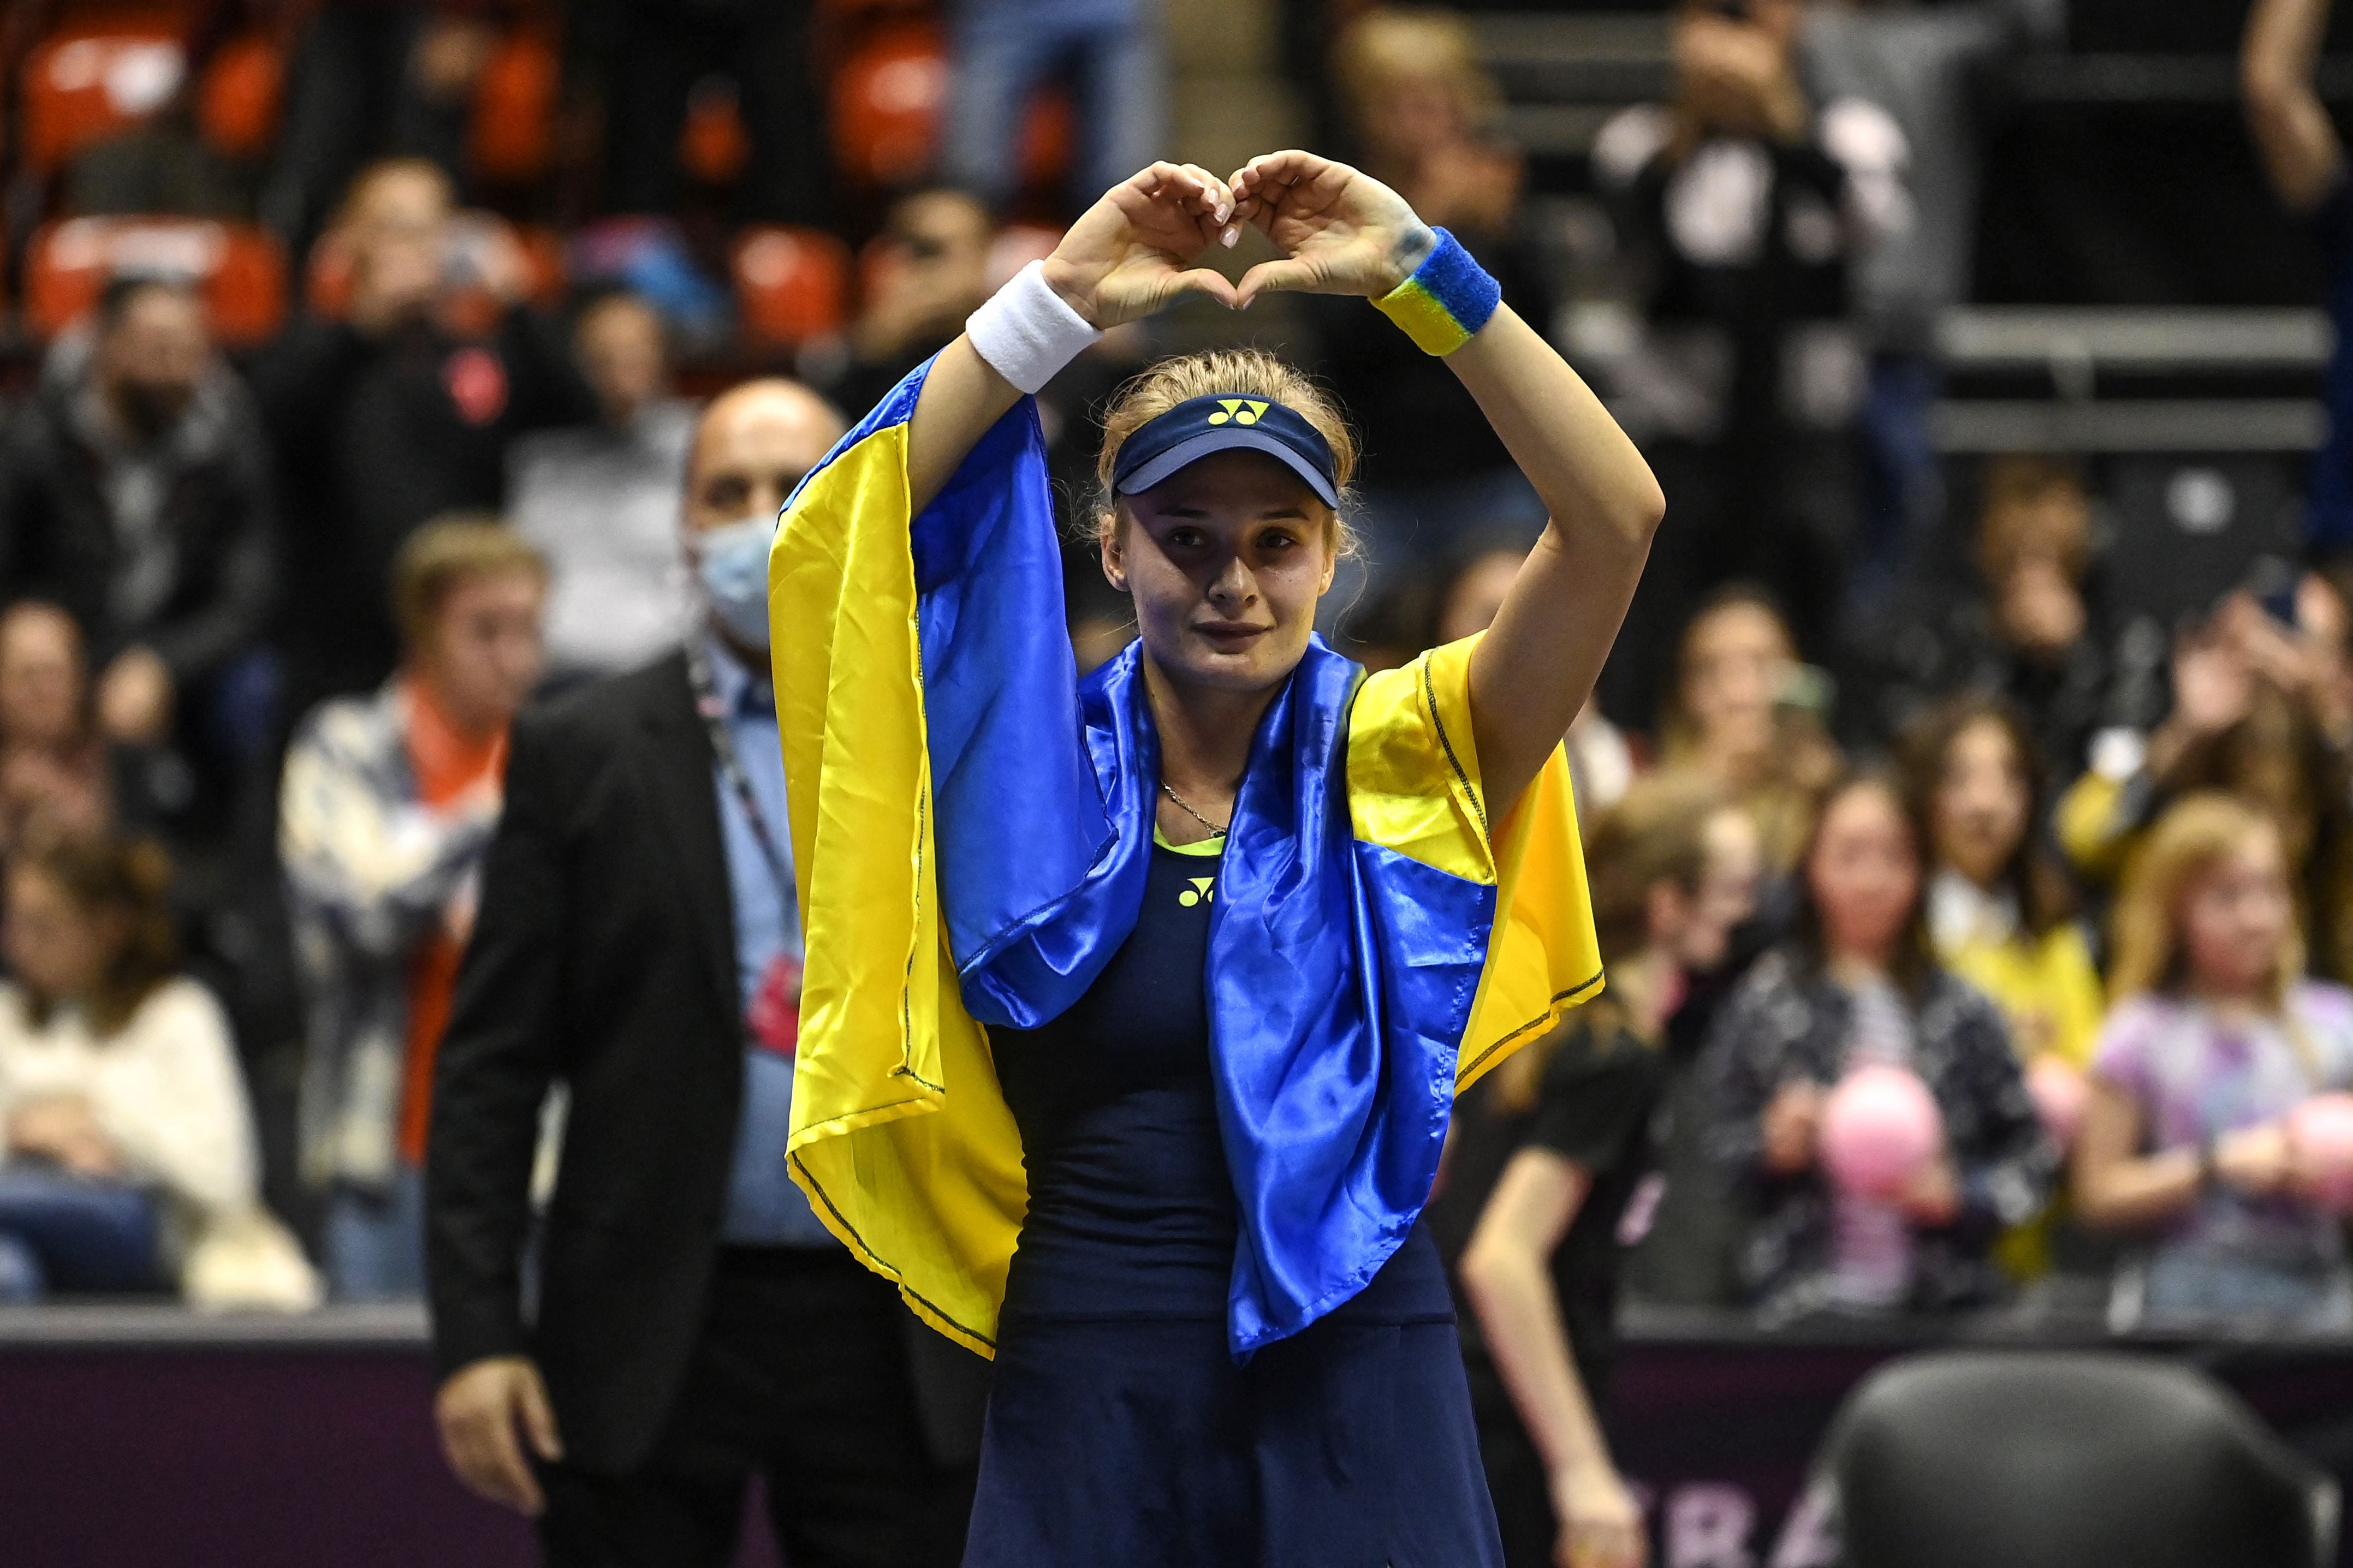 Ukraine’s Dayana Yastremska, wrapped in the Ukrainian national flag